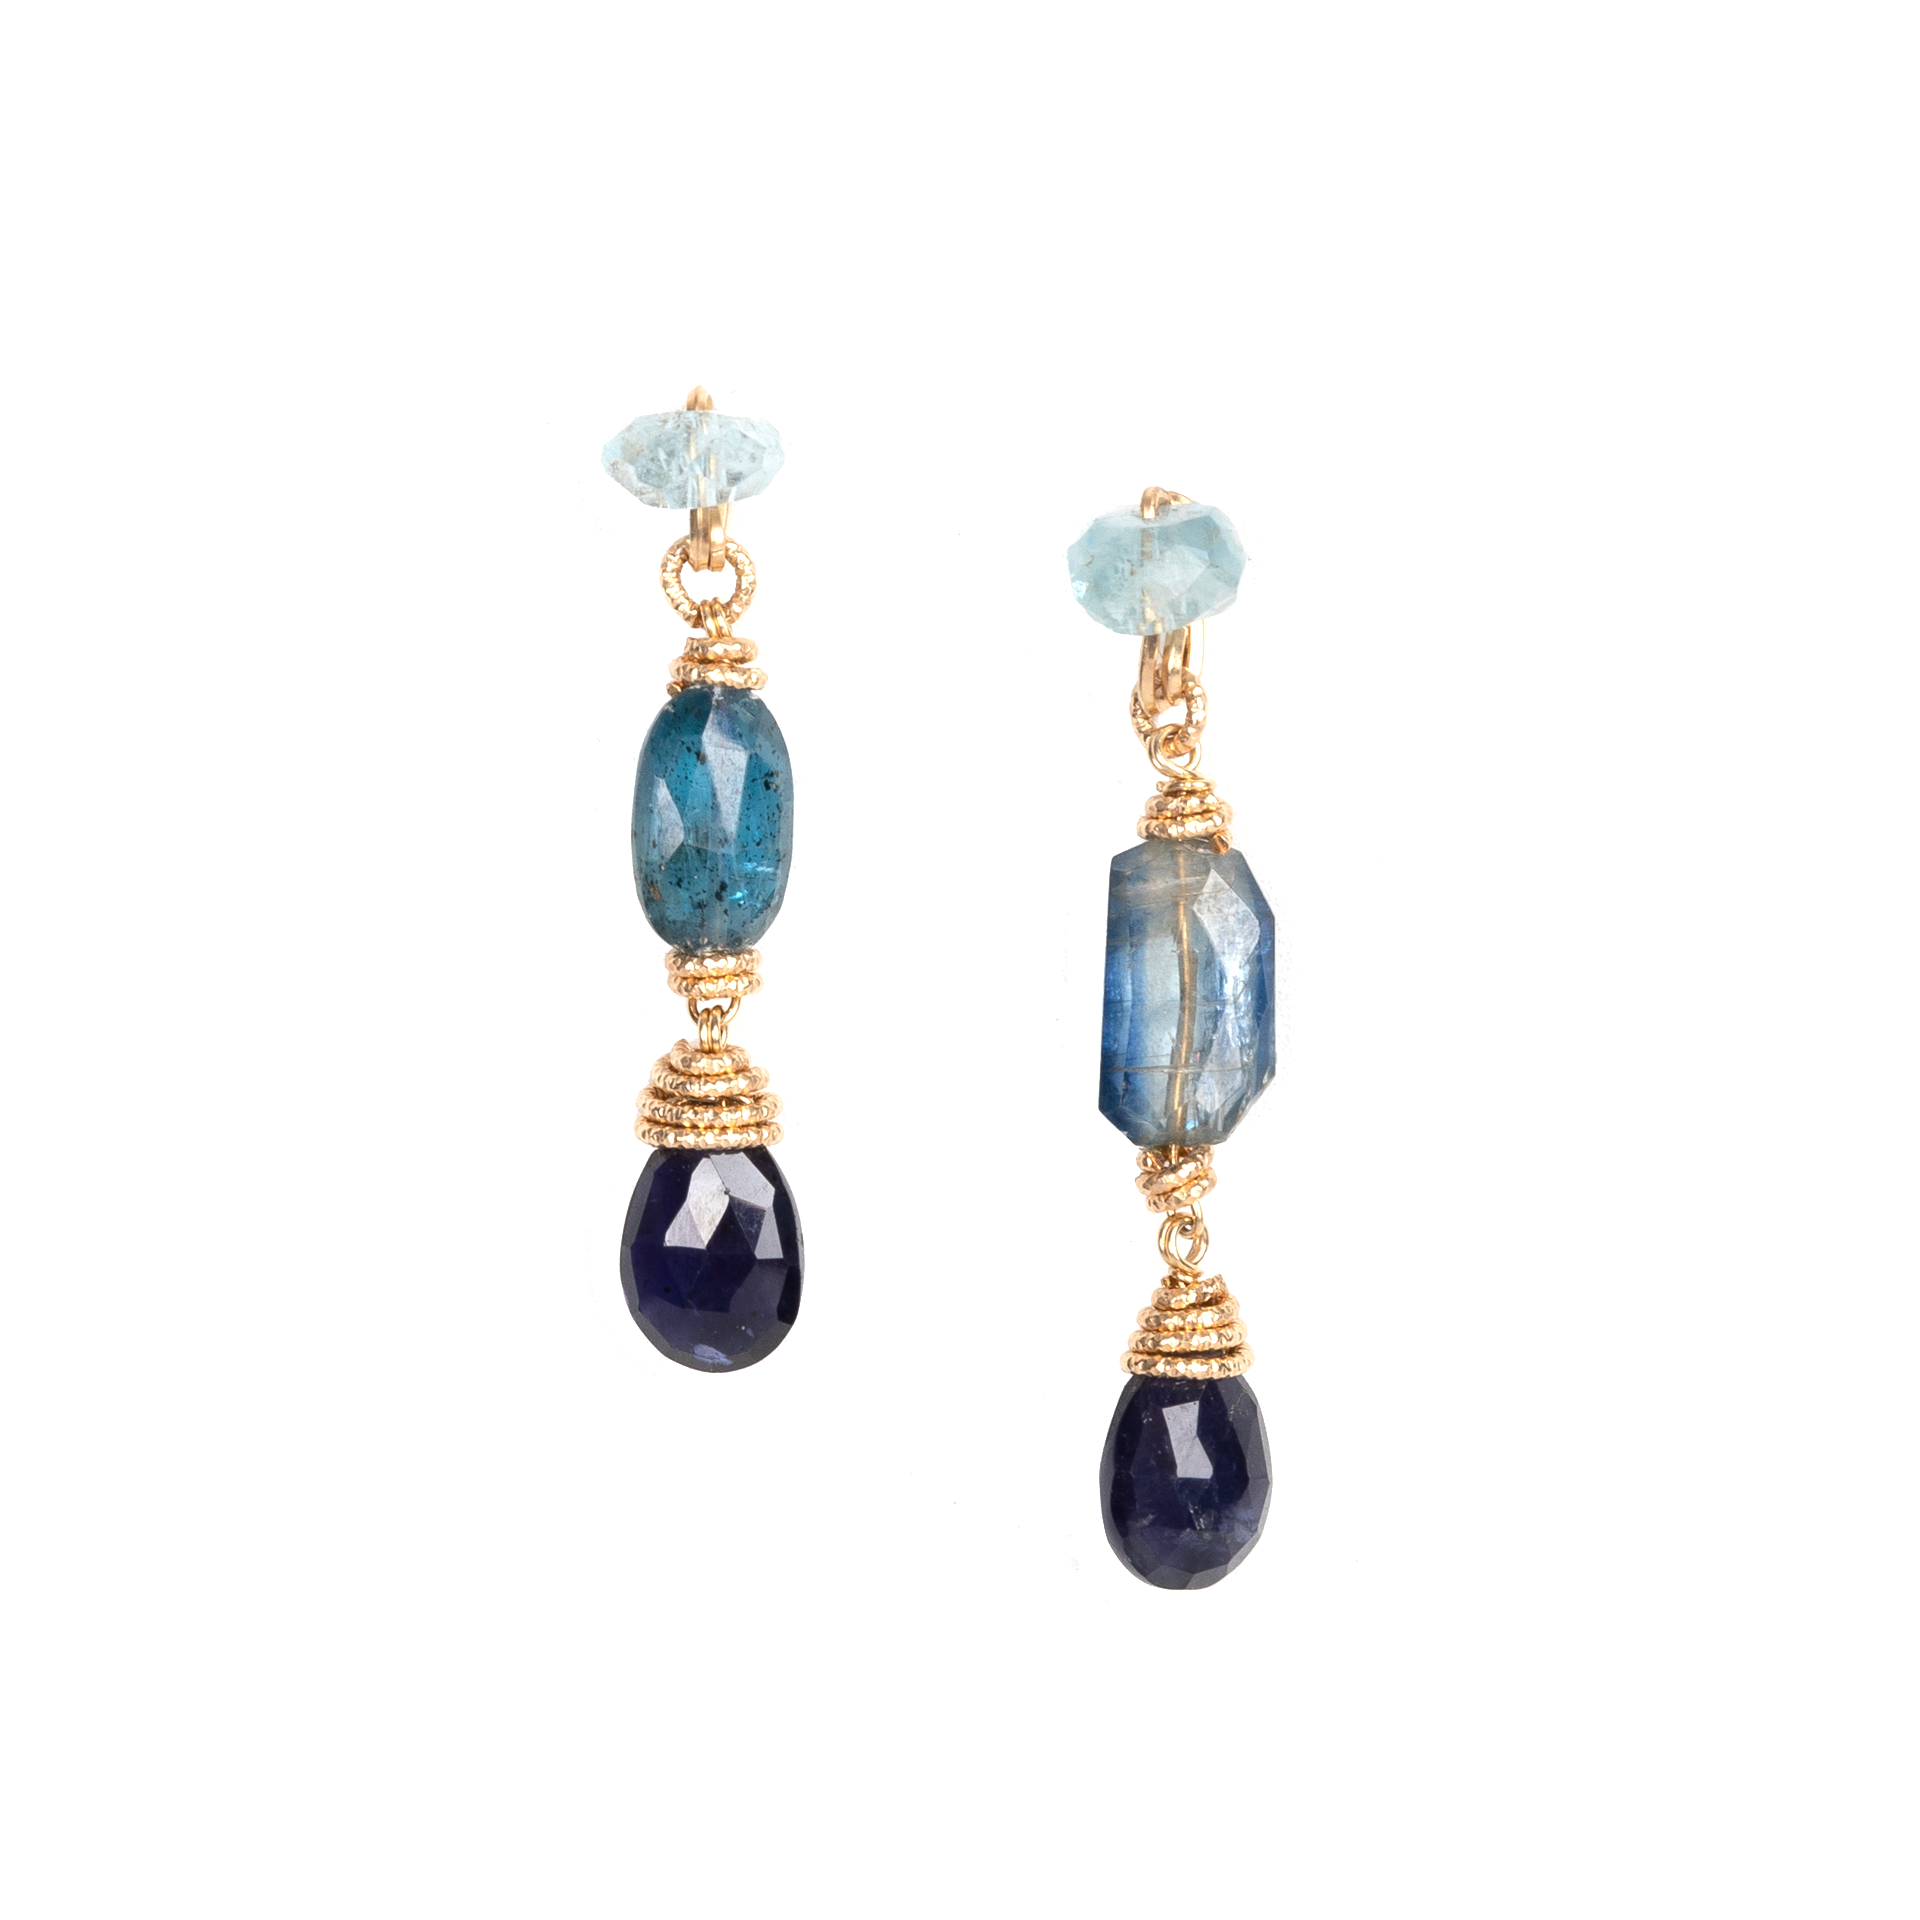 Gioconda Earrings - Aquamarine, Kyanite & Iolite Earrings TARBAY   